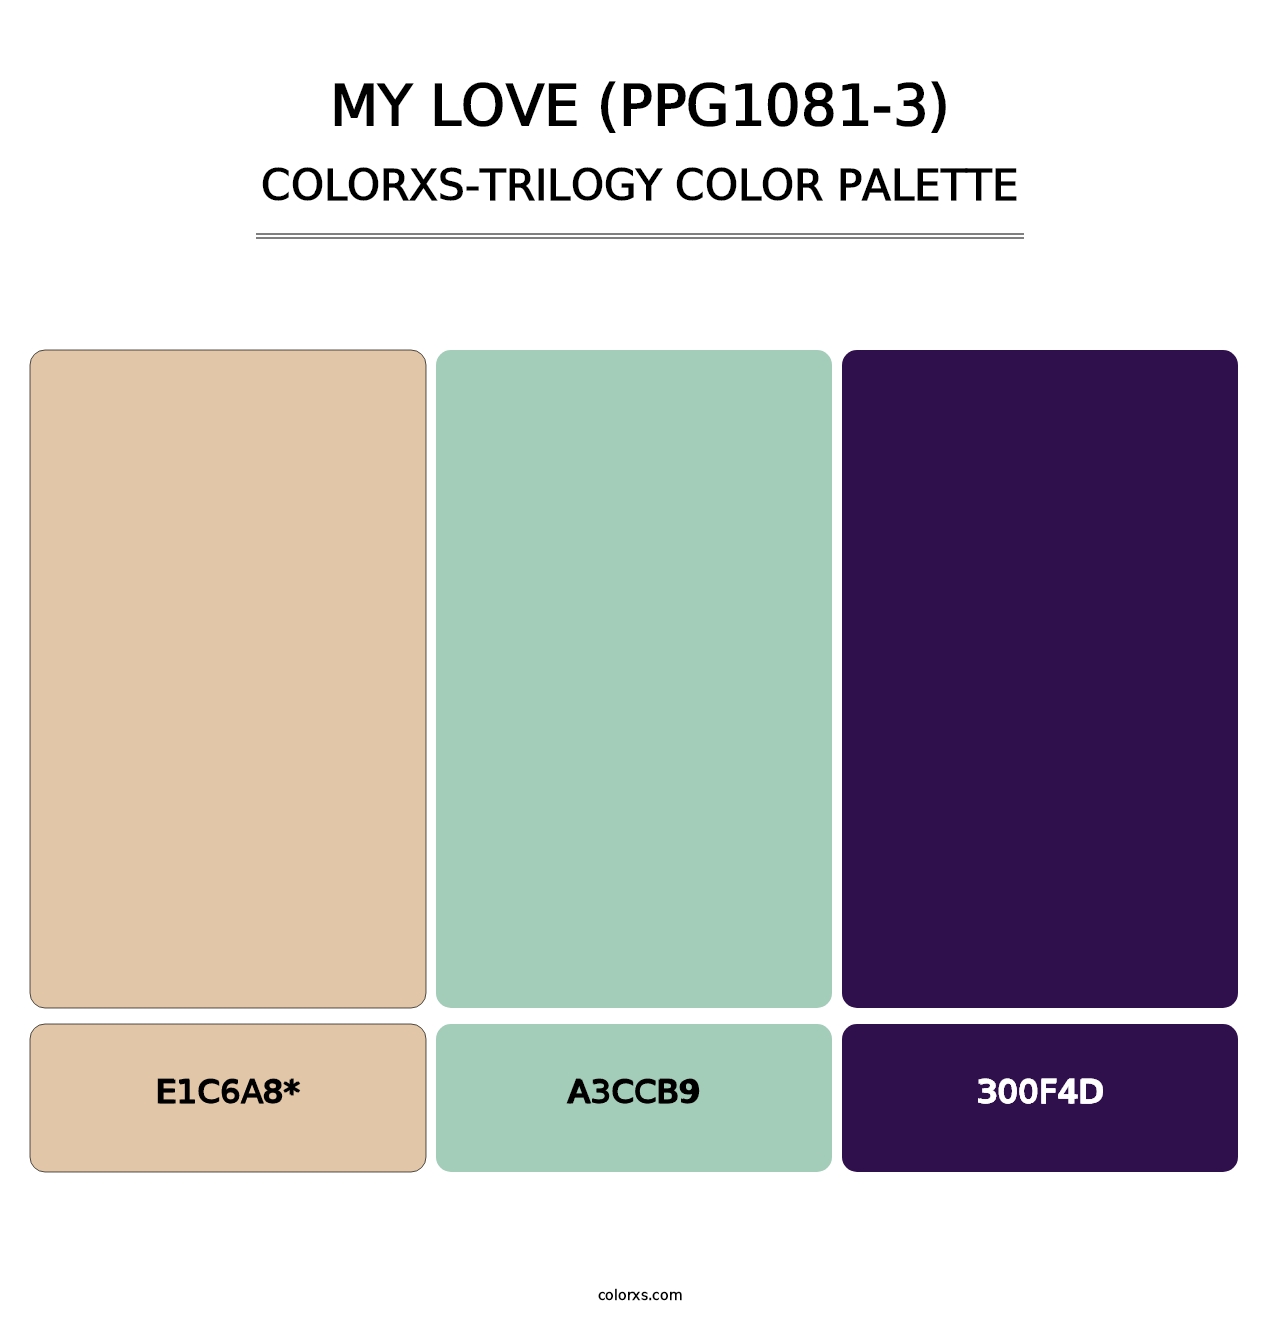 My Love (PPG1081-3) - Colorxs Trilogy Palette